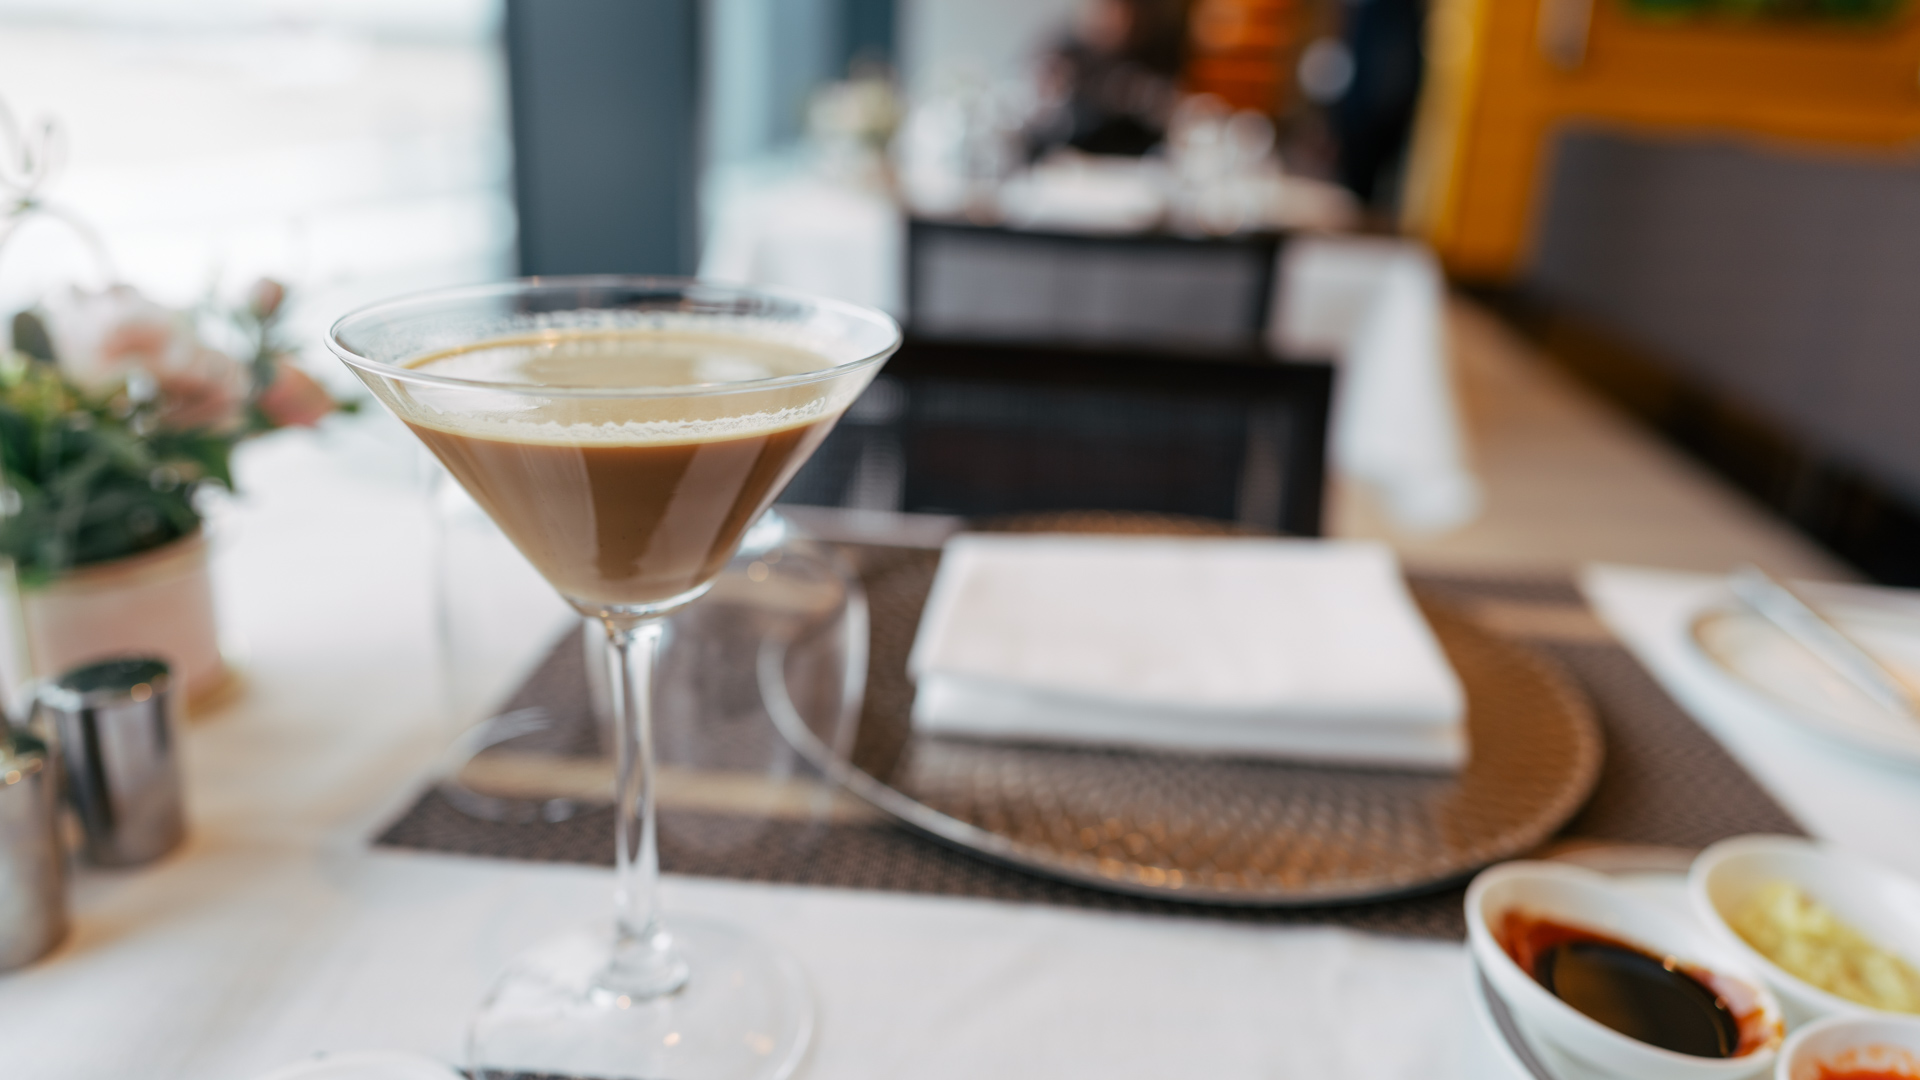 SilverKris First Lounge London espresso martini